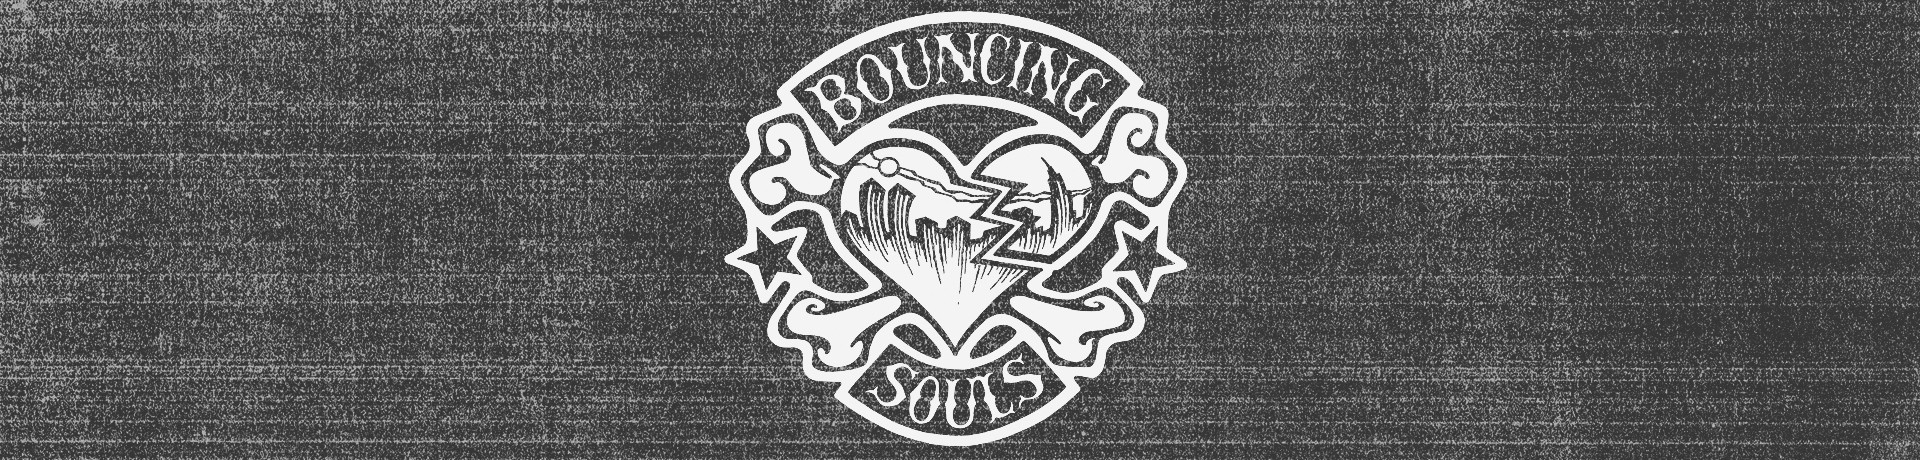 Bouncing Souls - Skull and Bones